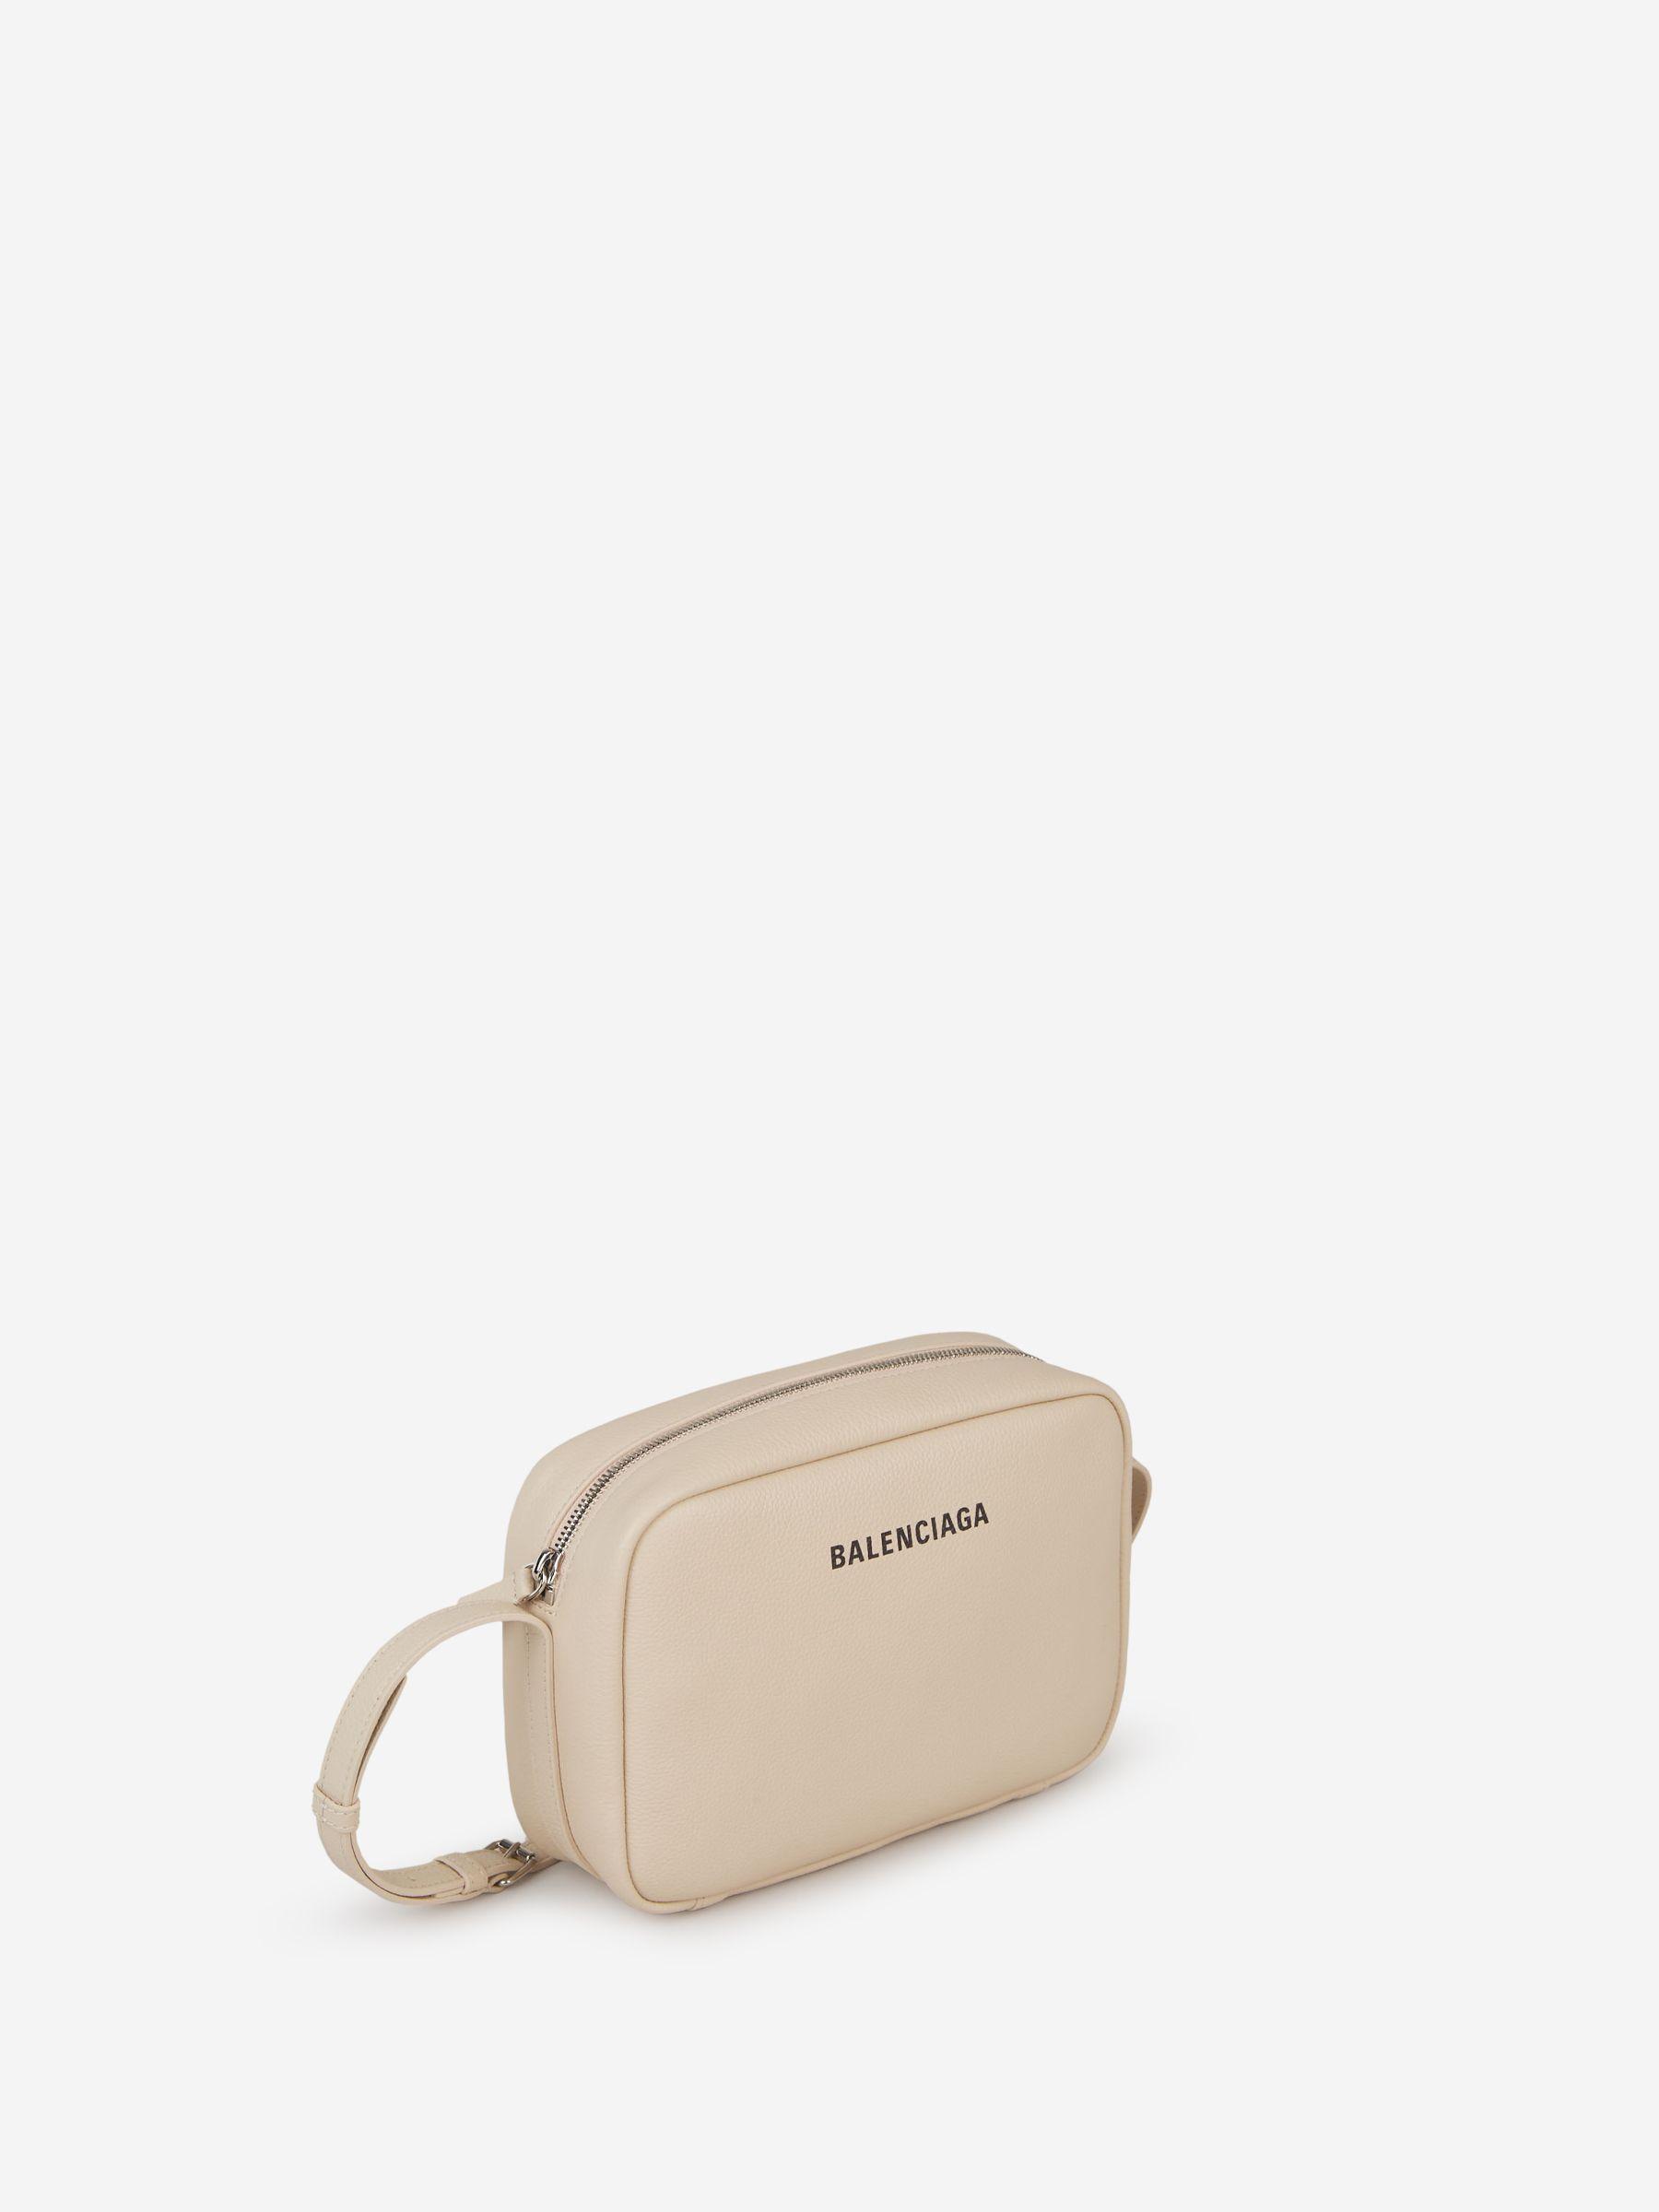 Balenciaga Everyday Camera Shoulder Bag in Natural for Men